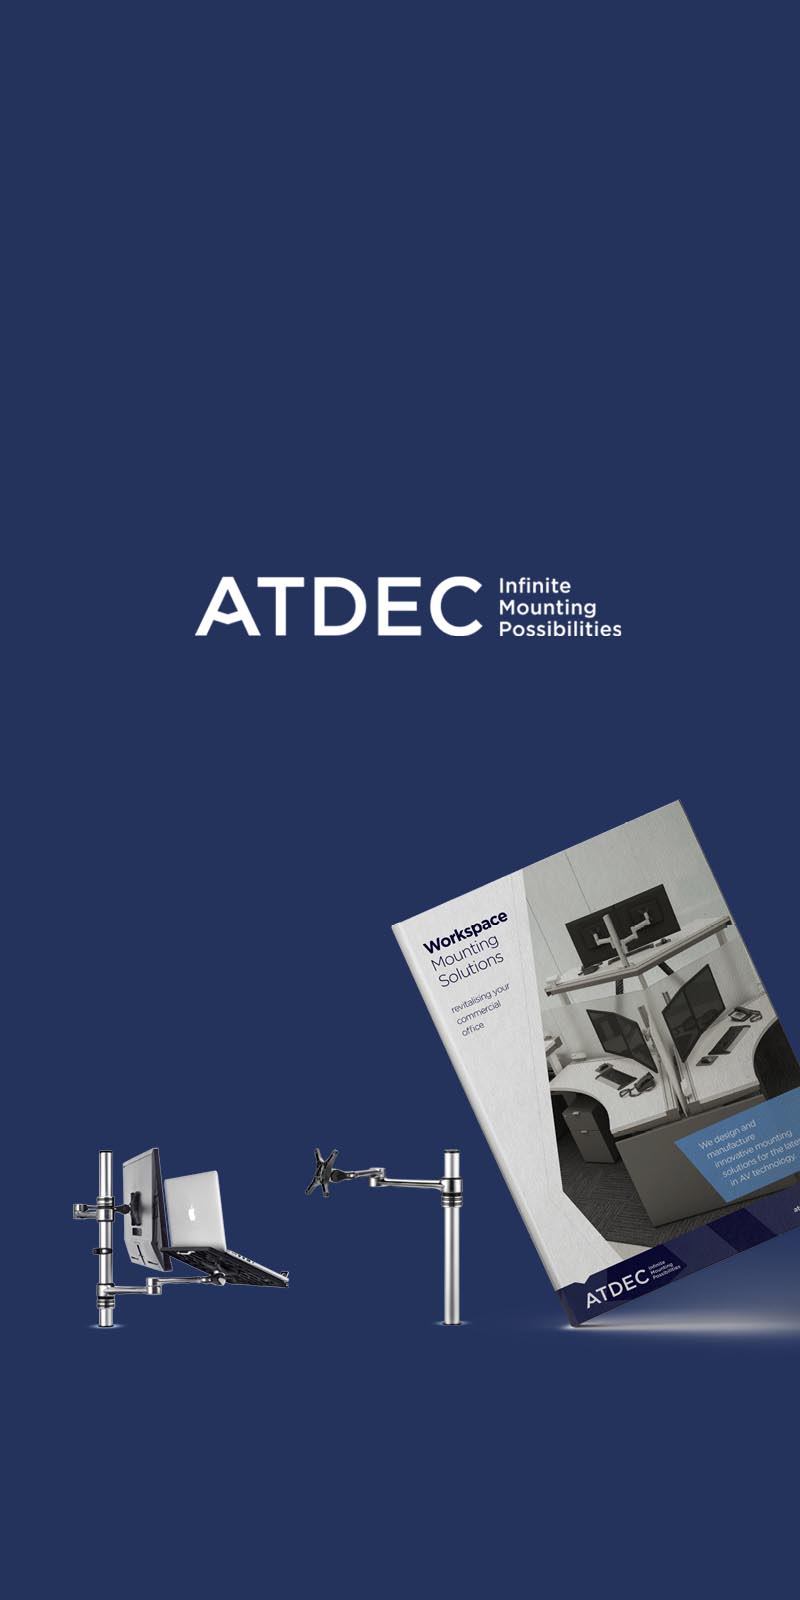 Atdec trade show booth design by Think Creative Agency